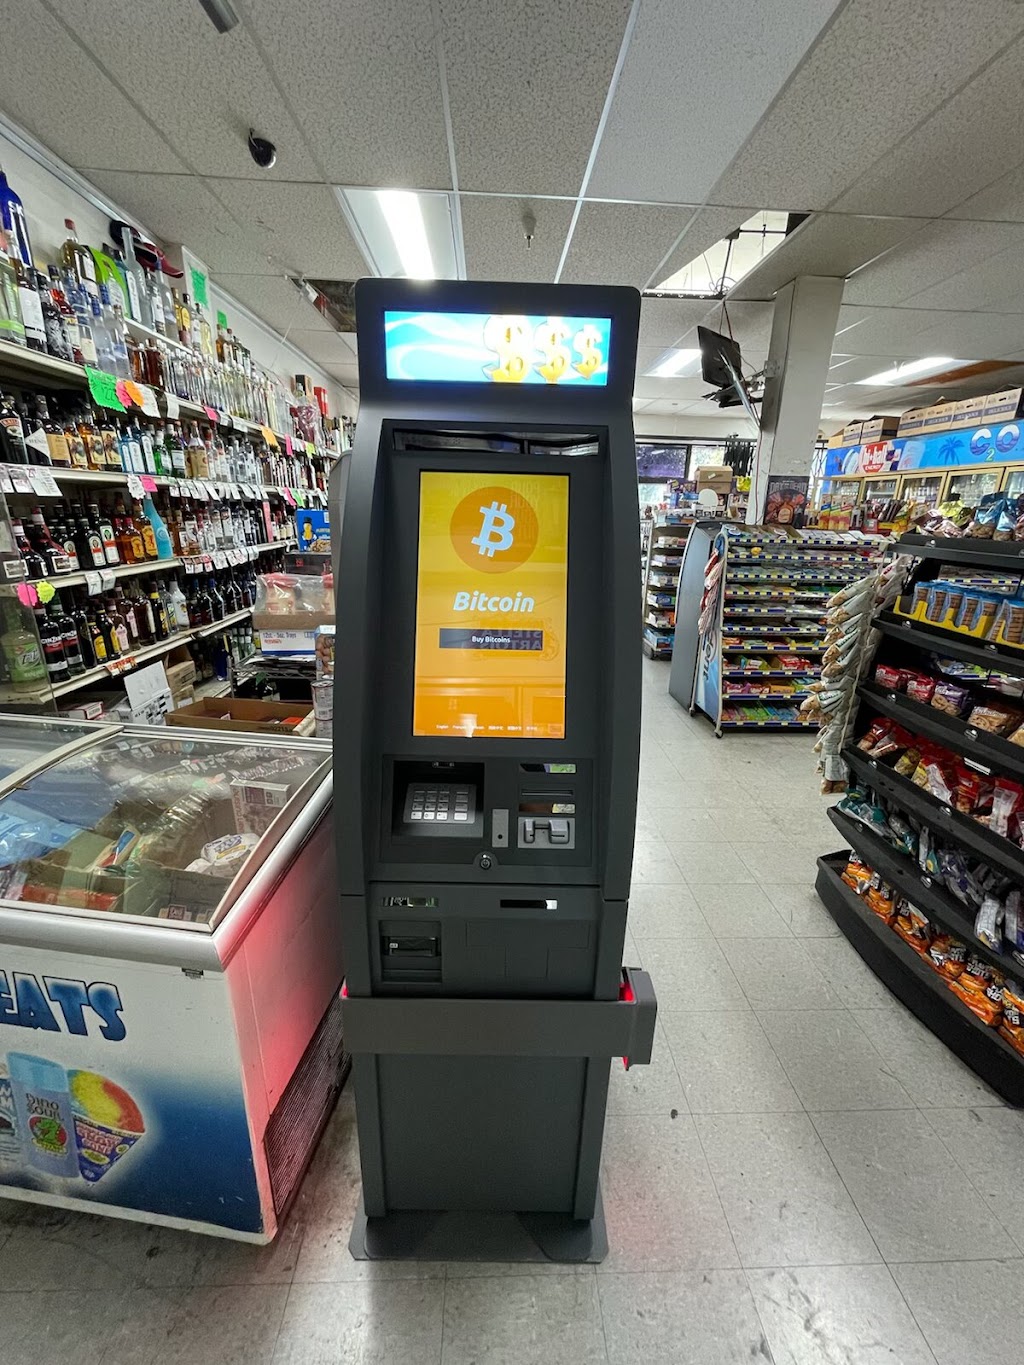 Black Swan Bitcoin ATM | 136 14th St, Oakland, CA 94612 | Phone: (769) 759-7926